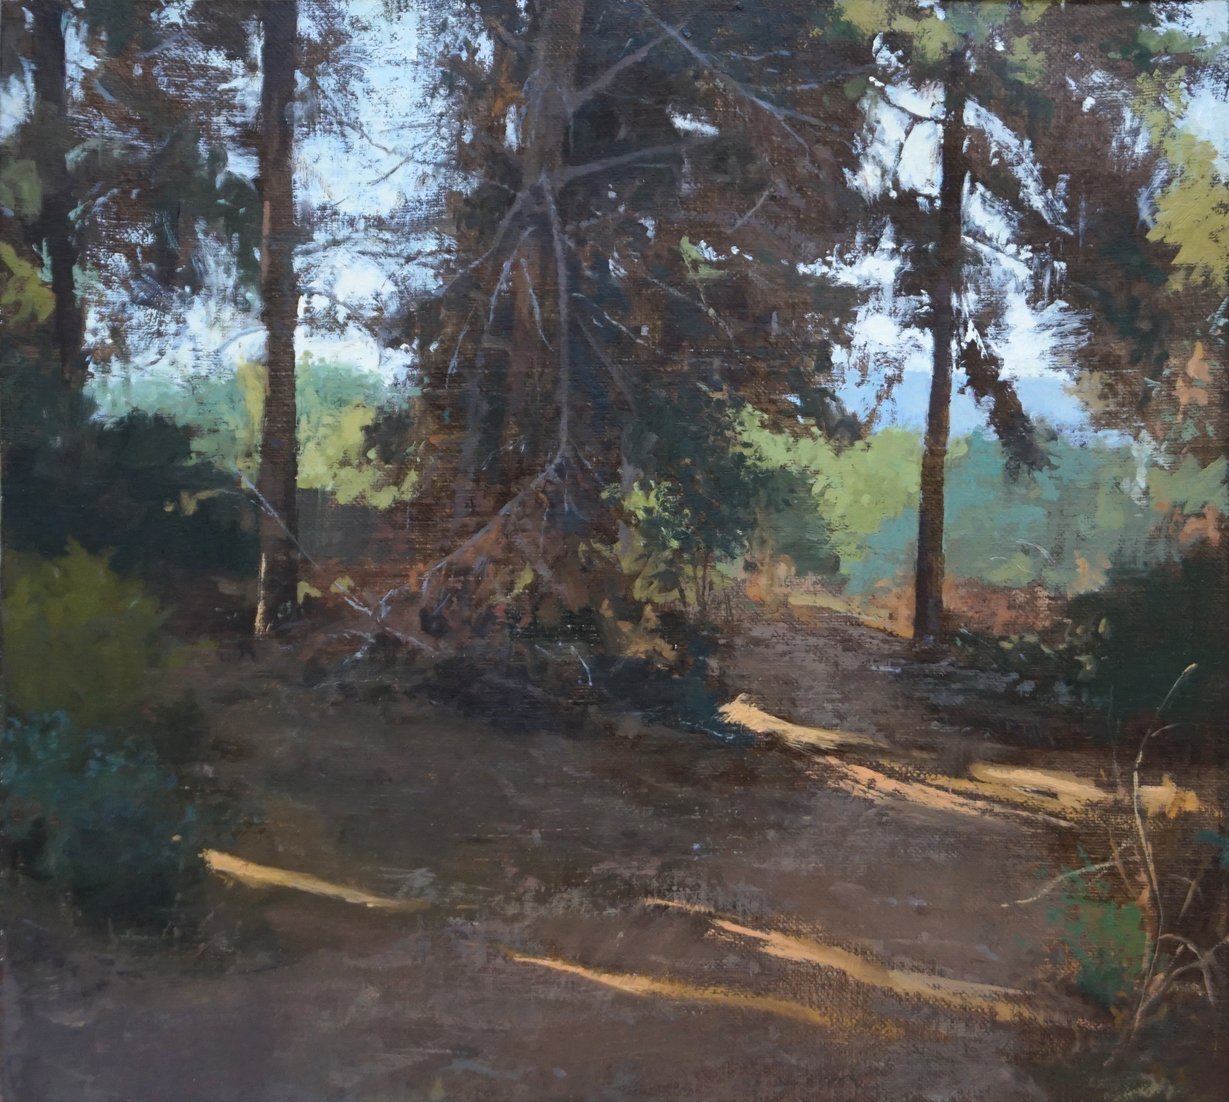  Oil on Canvas, 35x32 cm, 2018 